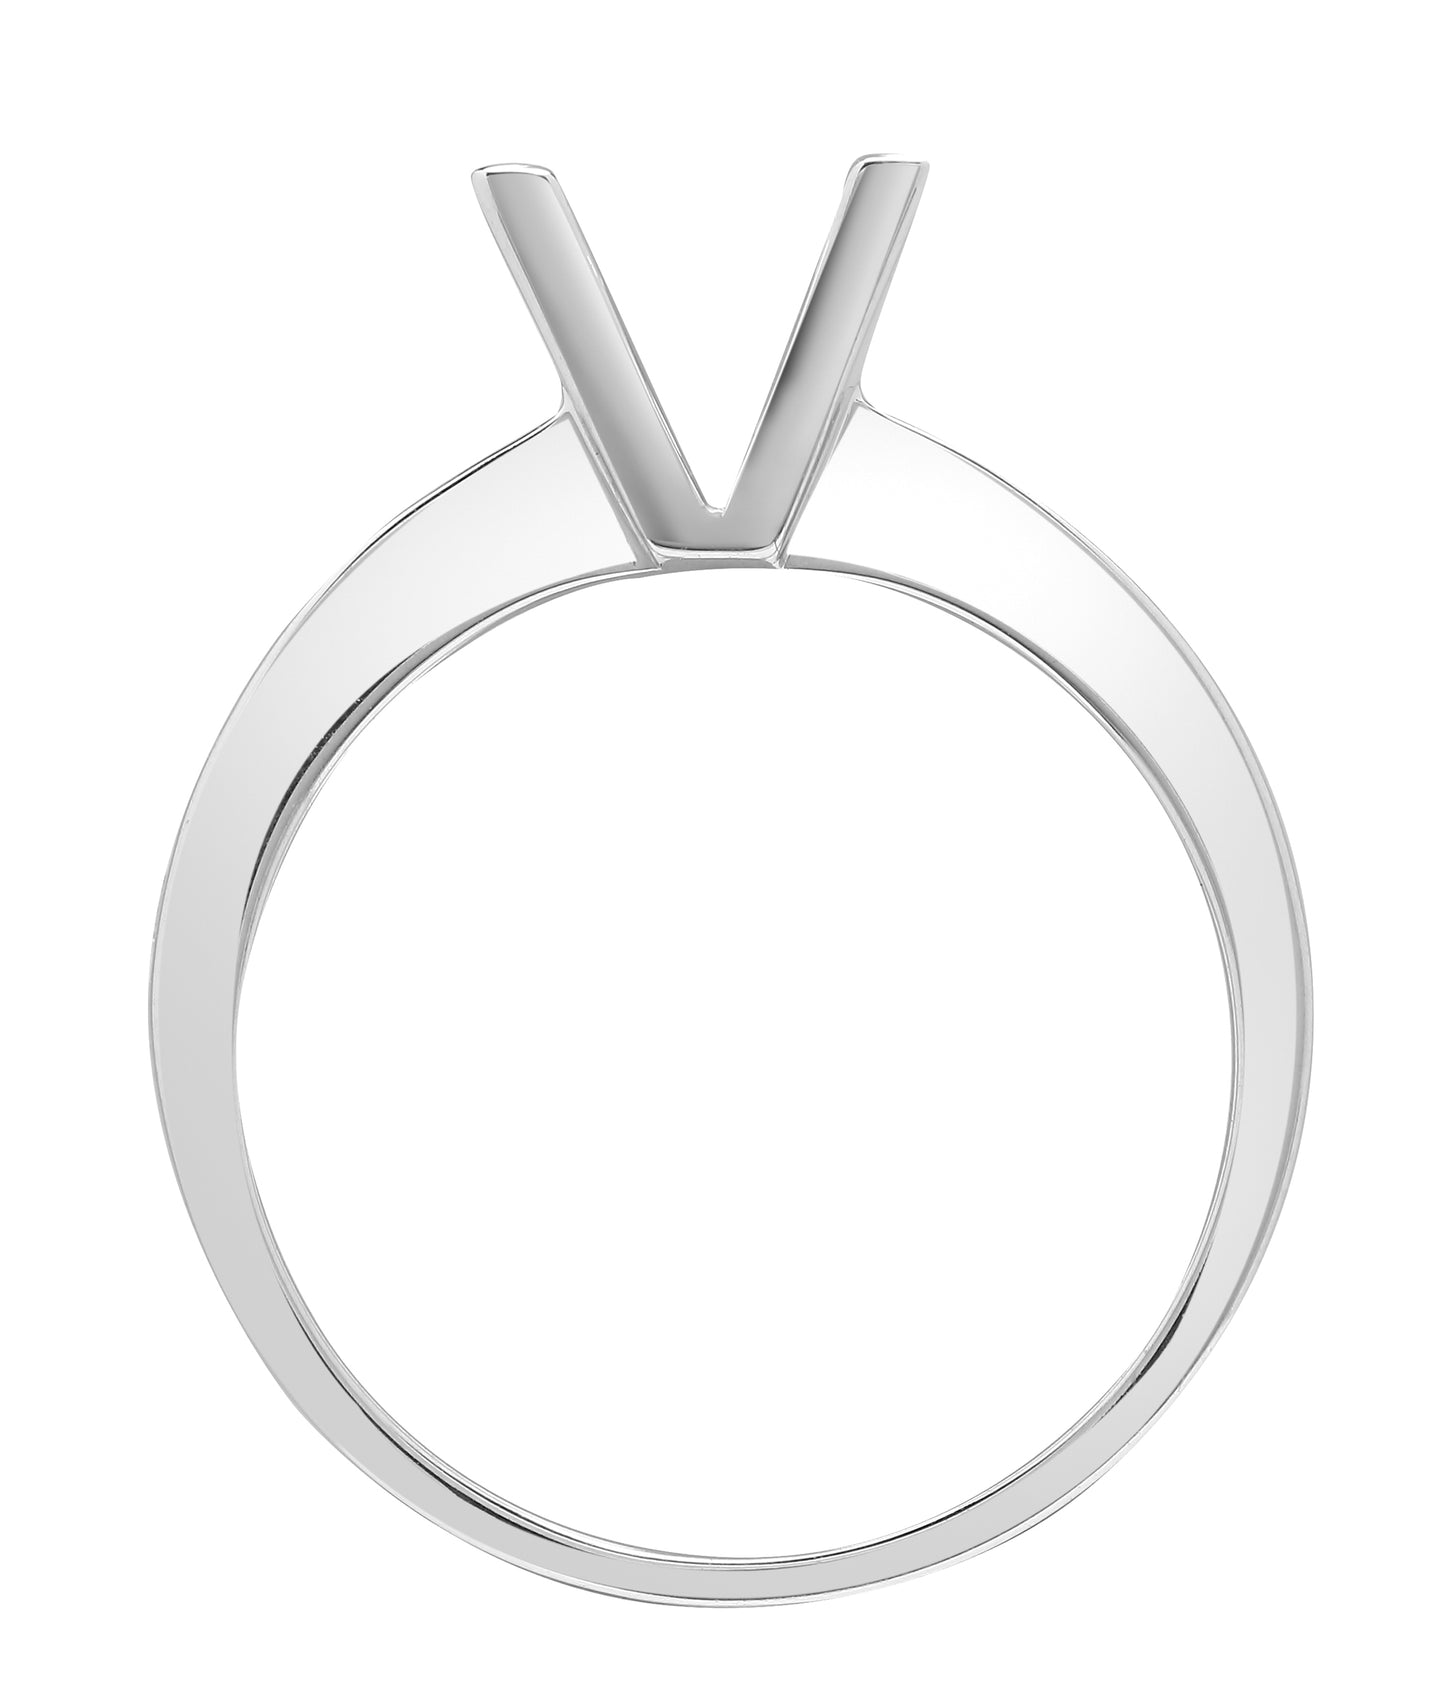 18ct White Gold  0.35ct Diamond Semi Set Mount Engagement Ring - 18R834-100